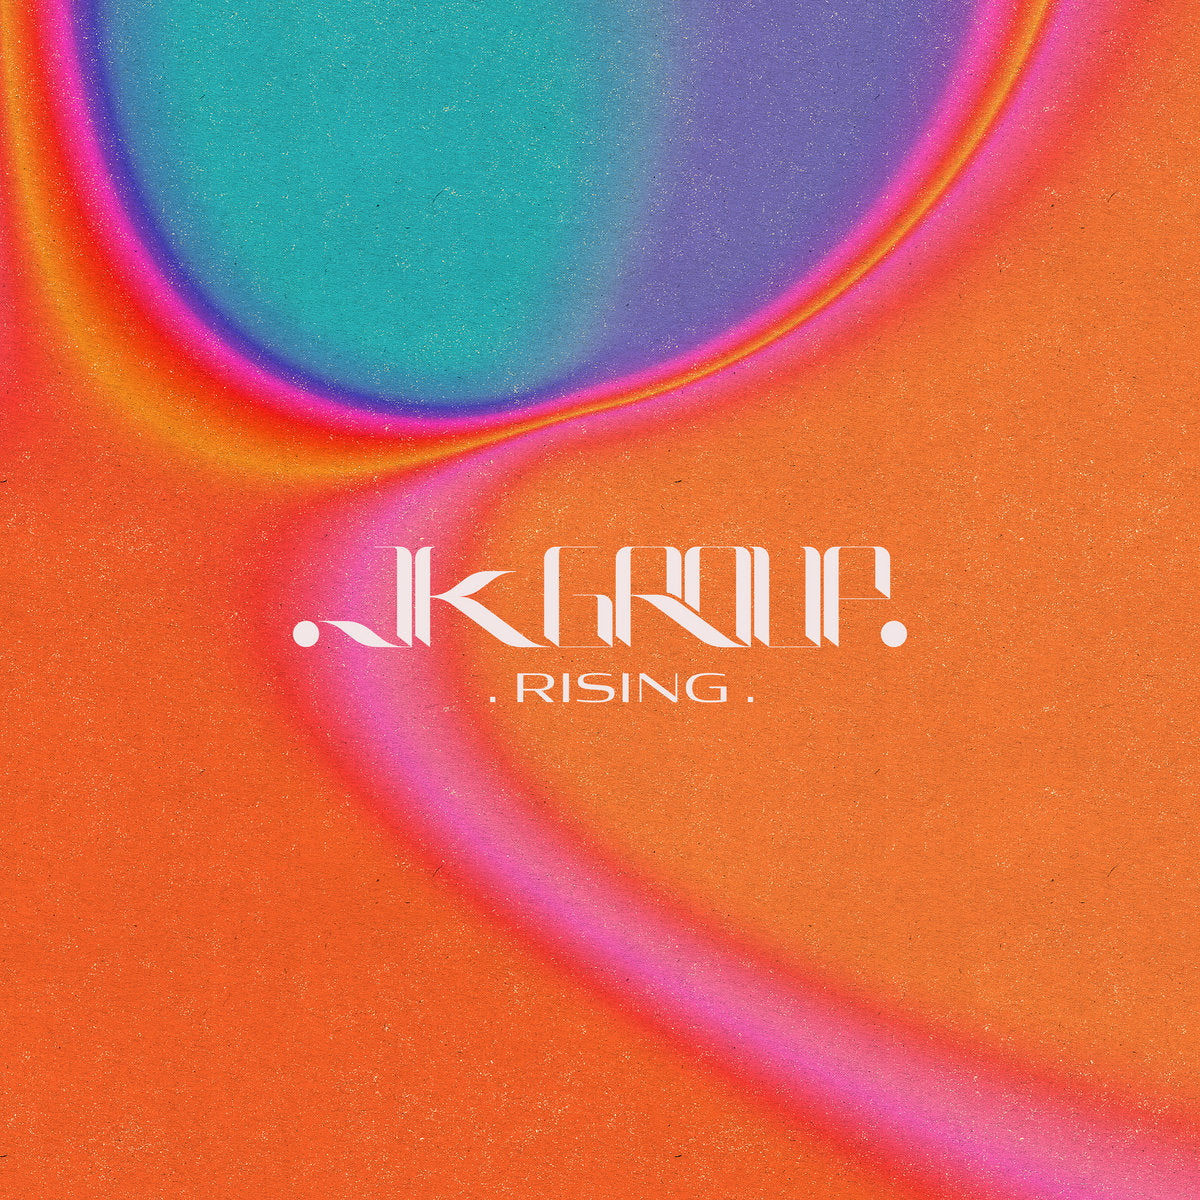 Jk Group - Rising EP